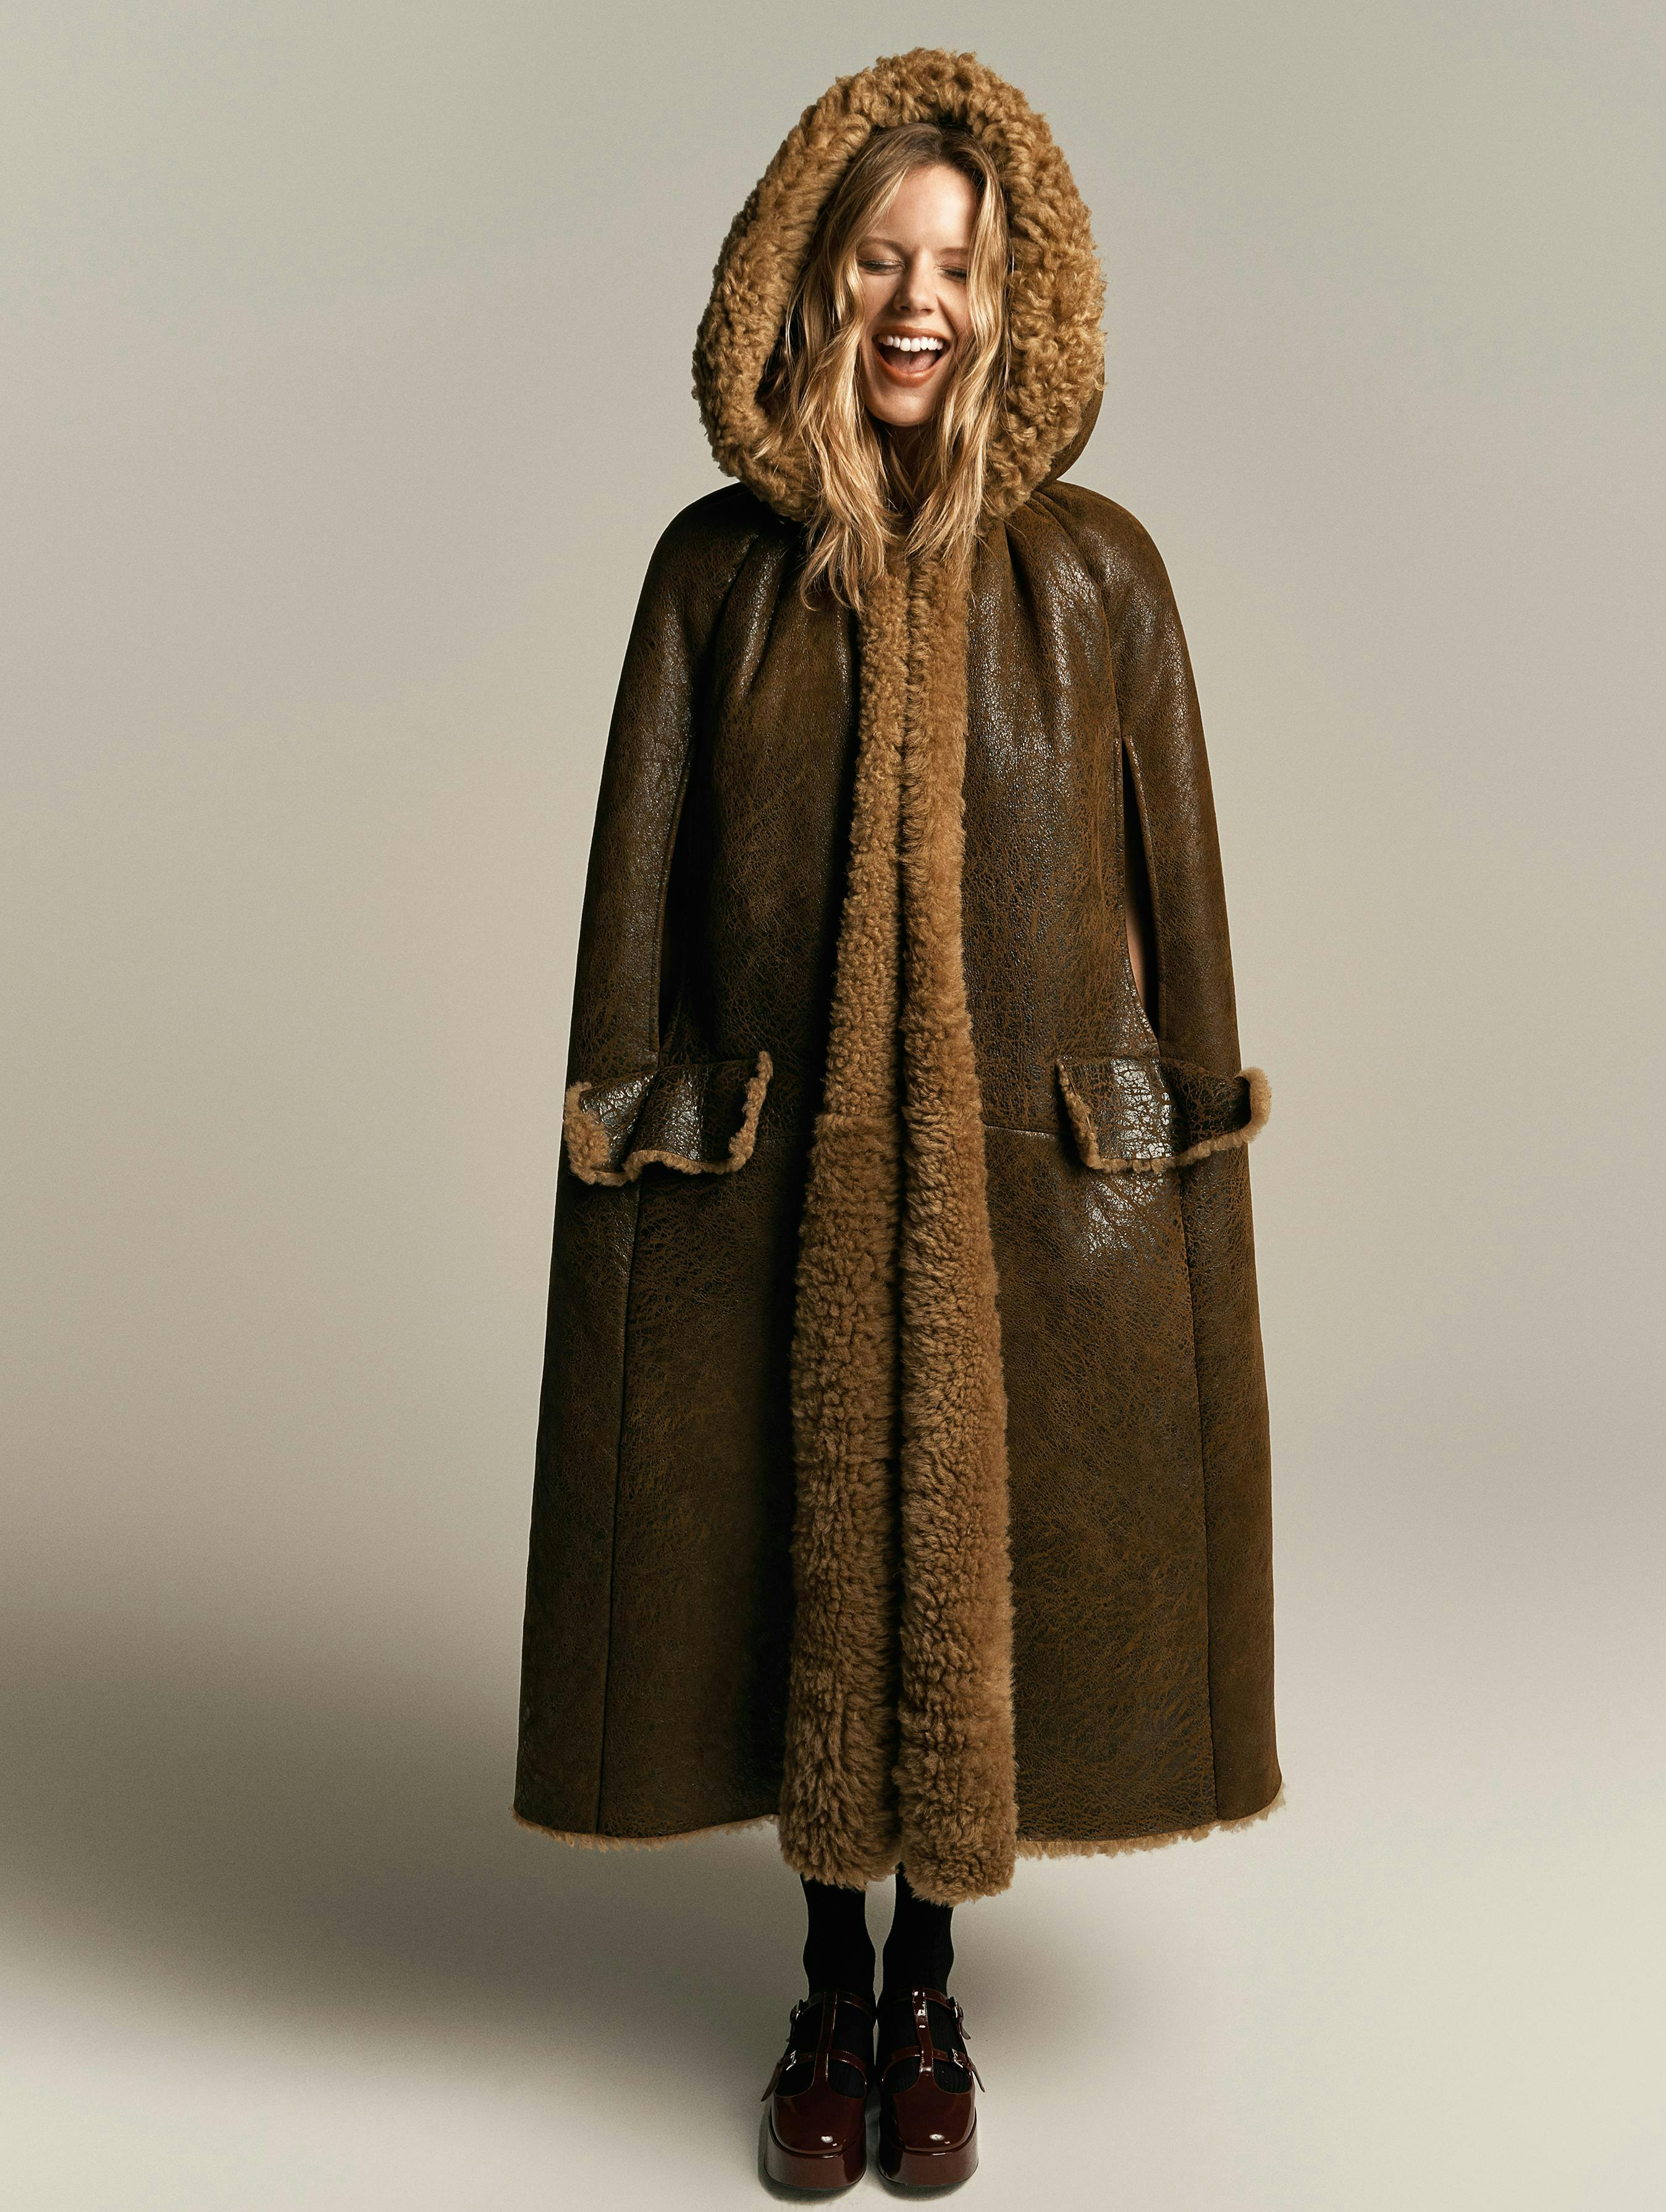 clothing apparel overcoat coat trench coat